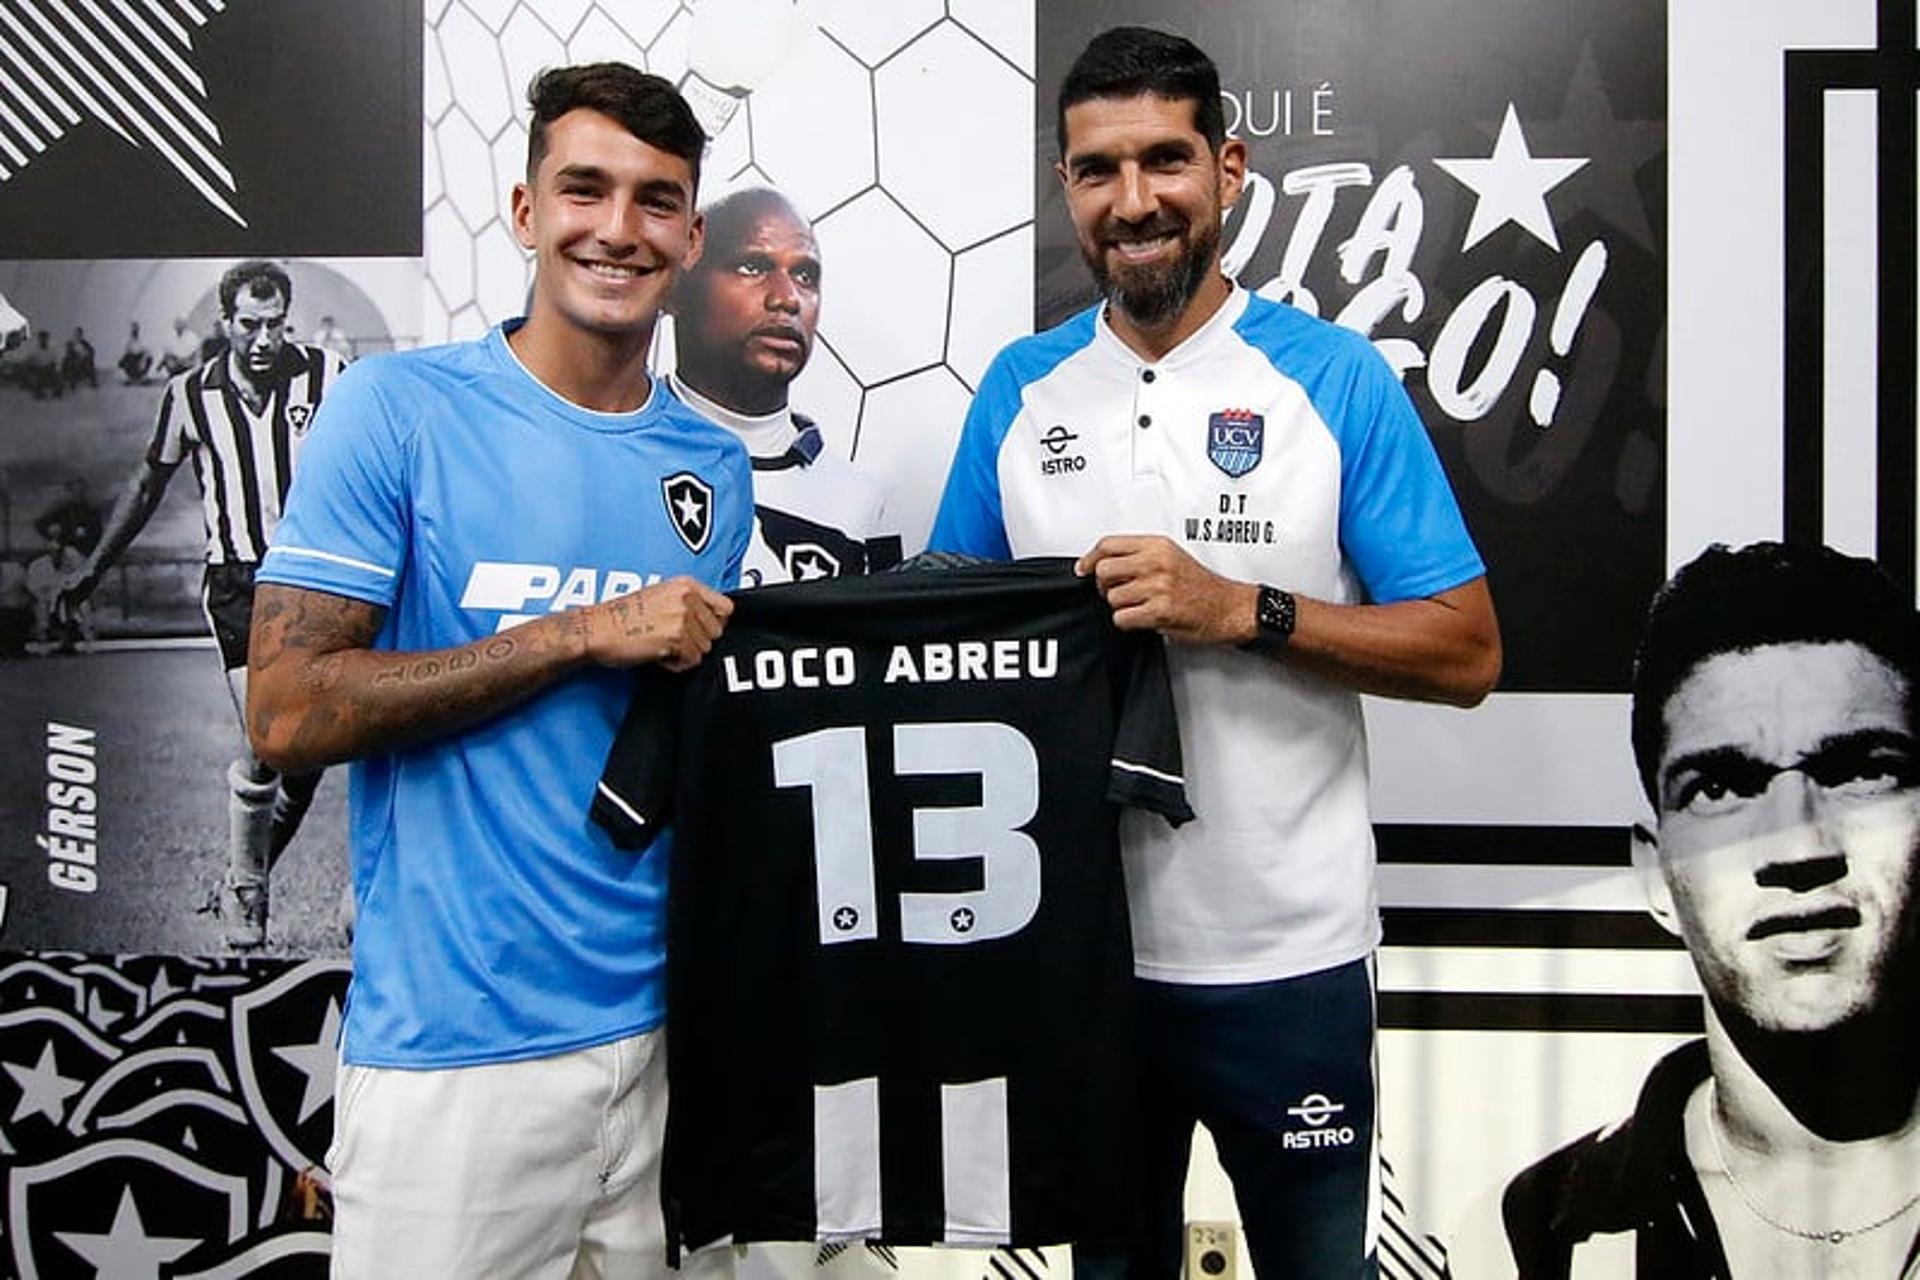 Loco Abreu e Diego Abreu